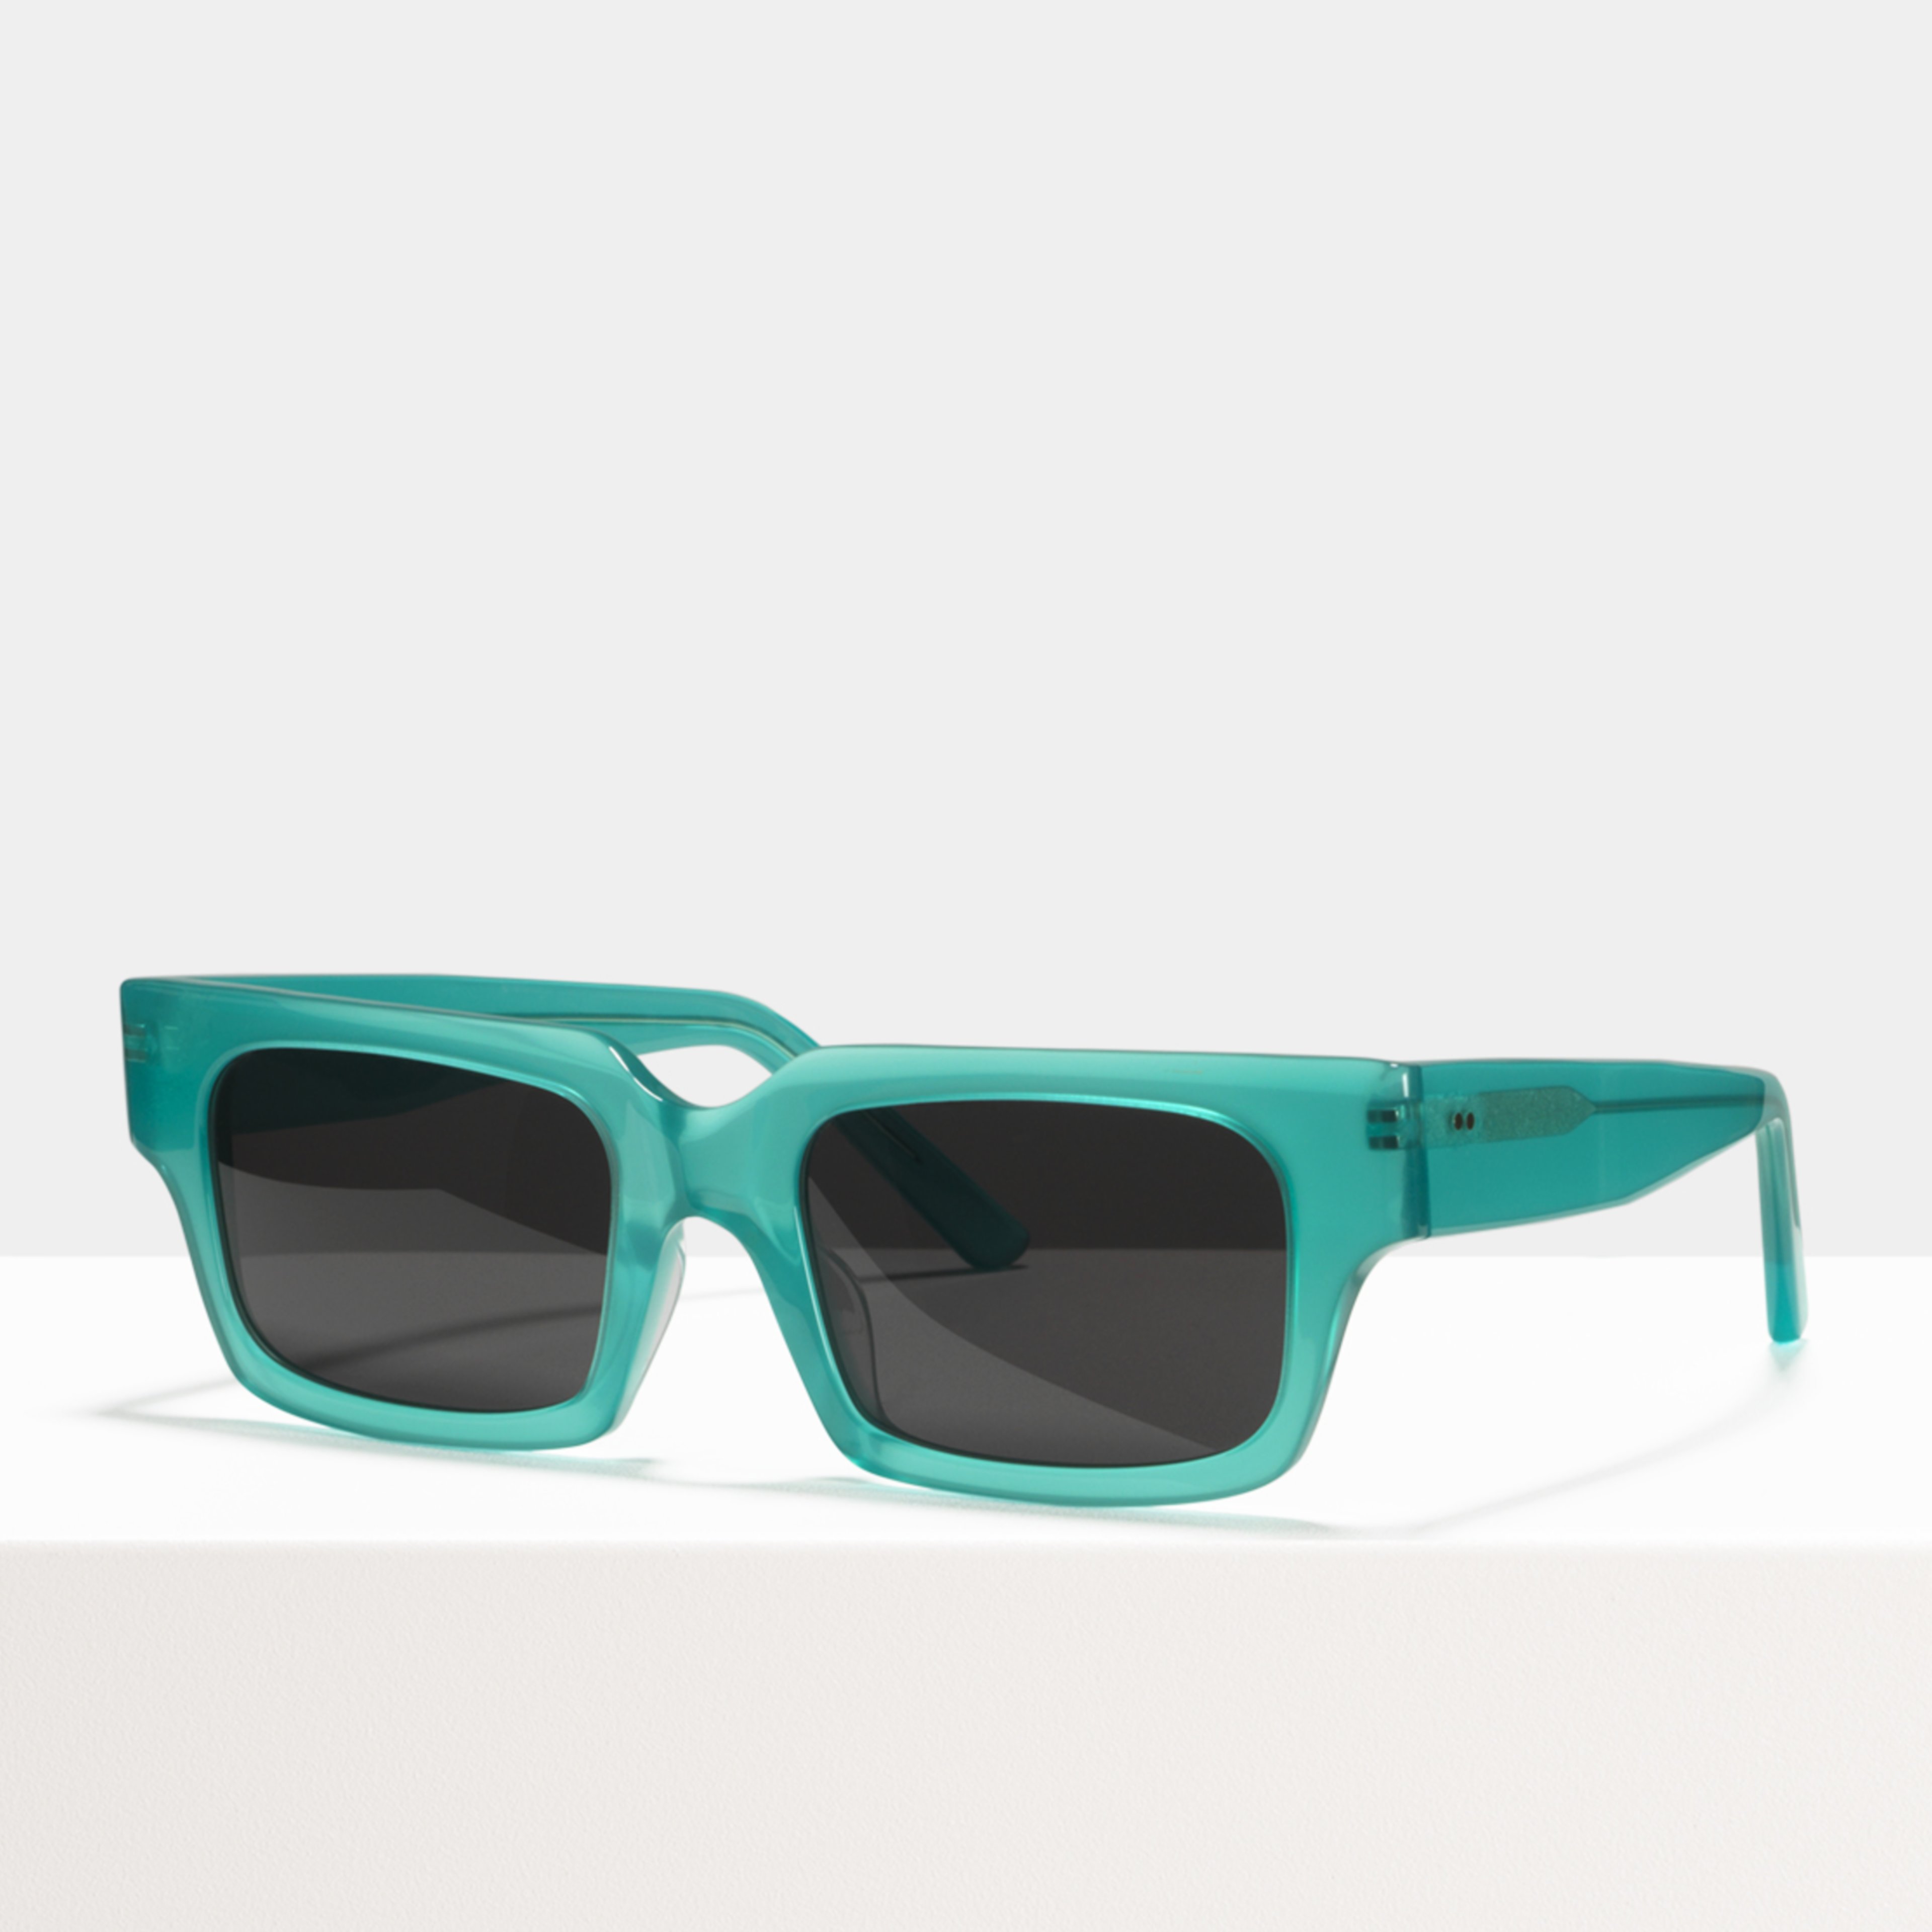 Ace & Tate Sonnenbrillen | rechteckig Acetat in Blau, Grün